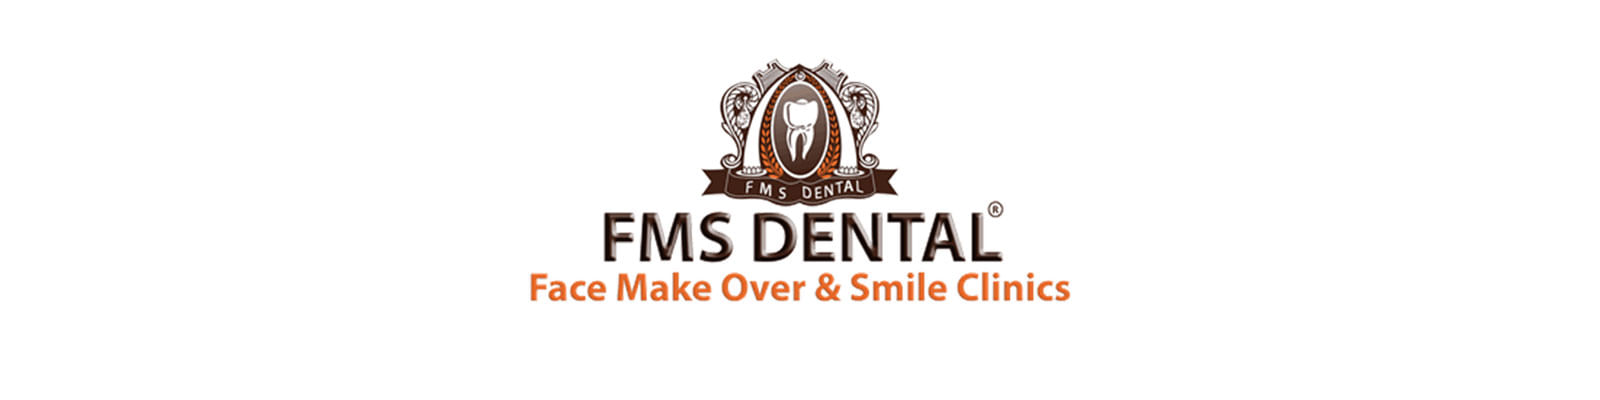 FMS Dental Hospital 